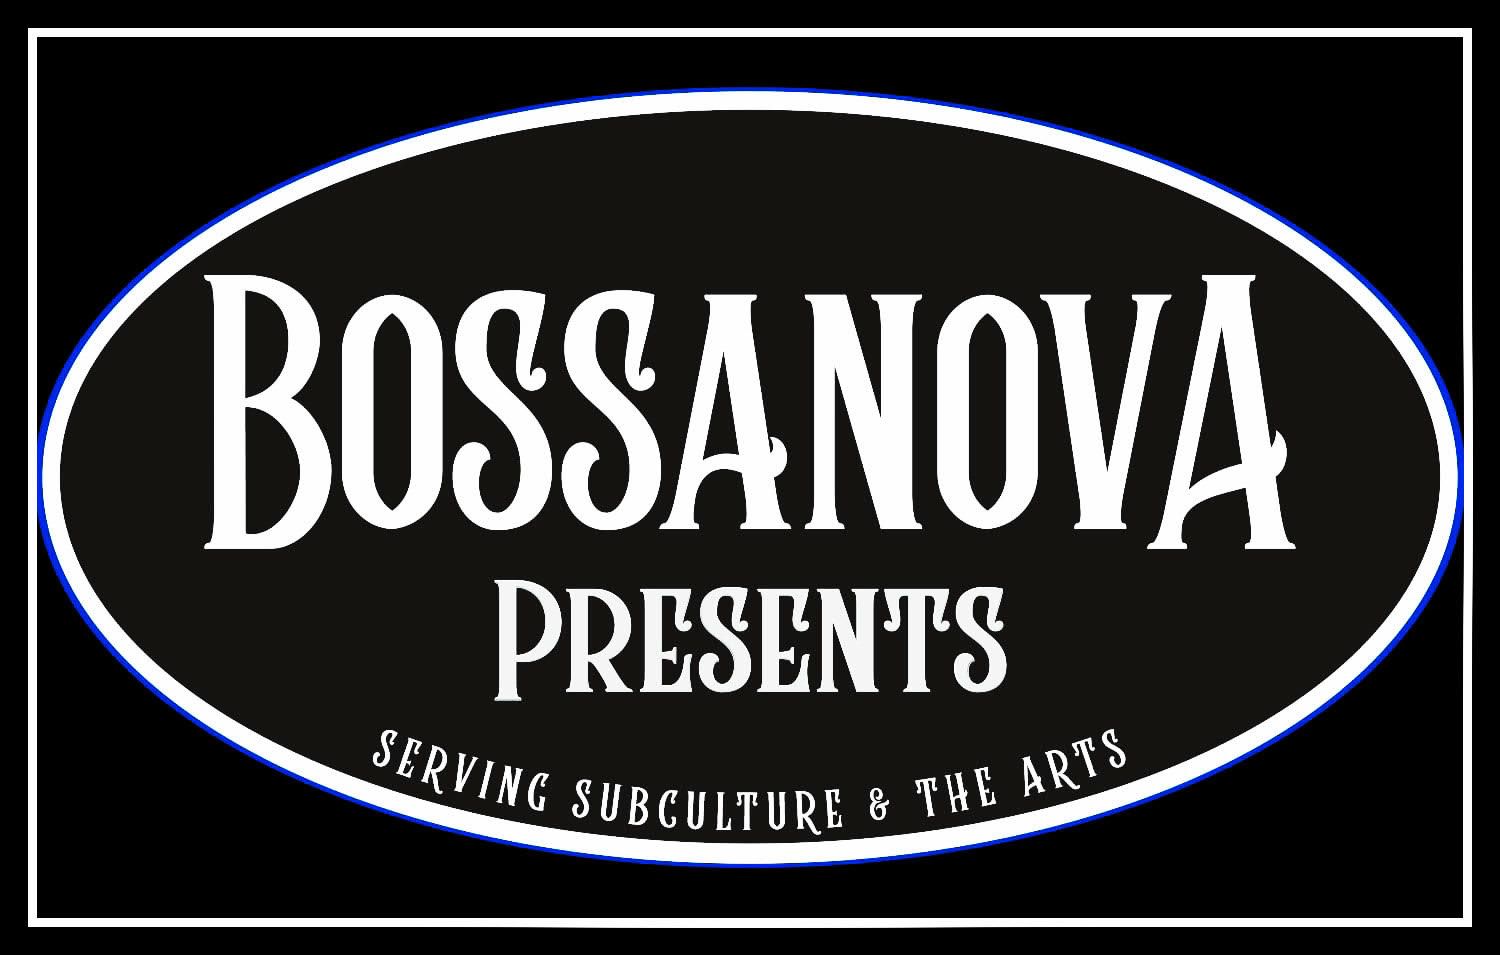 Bossanova Presents